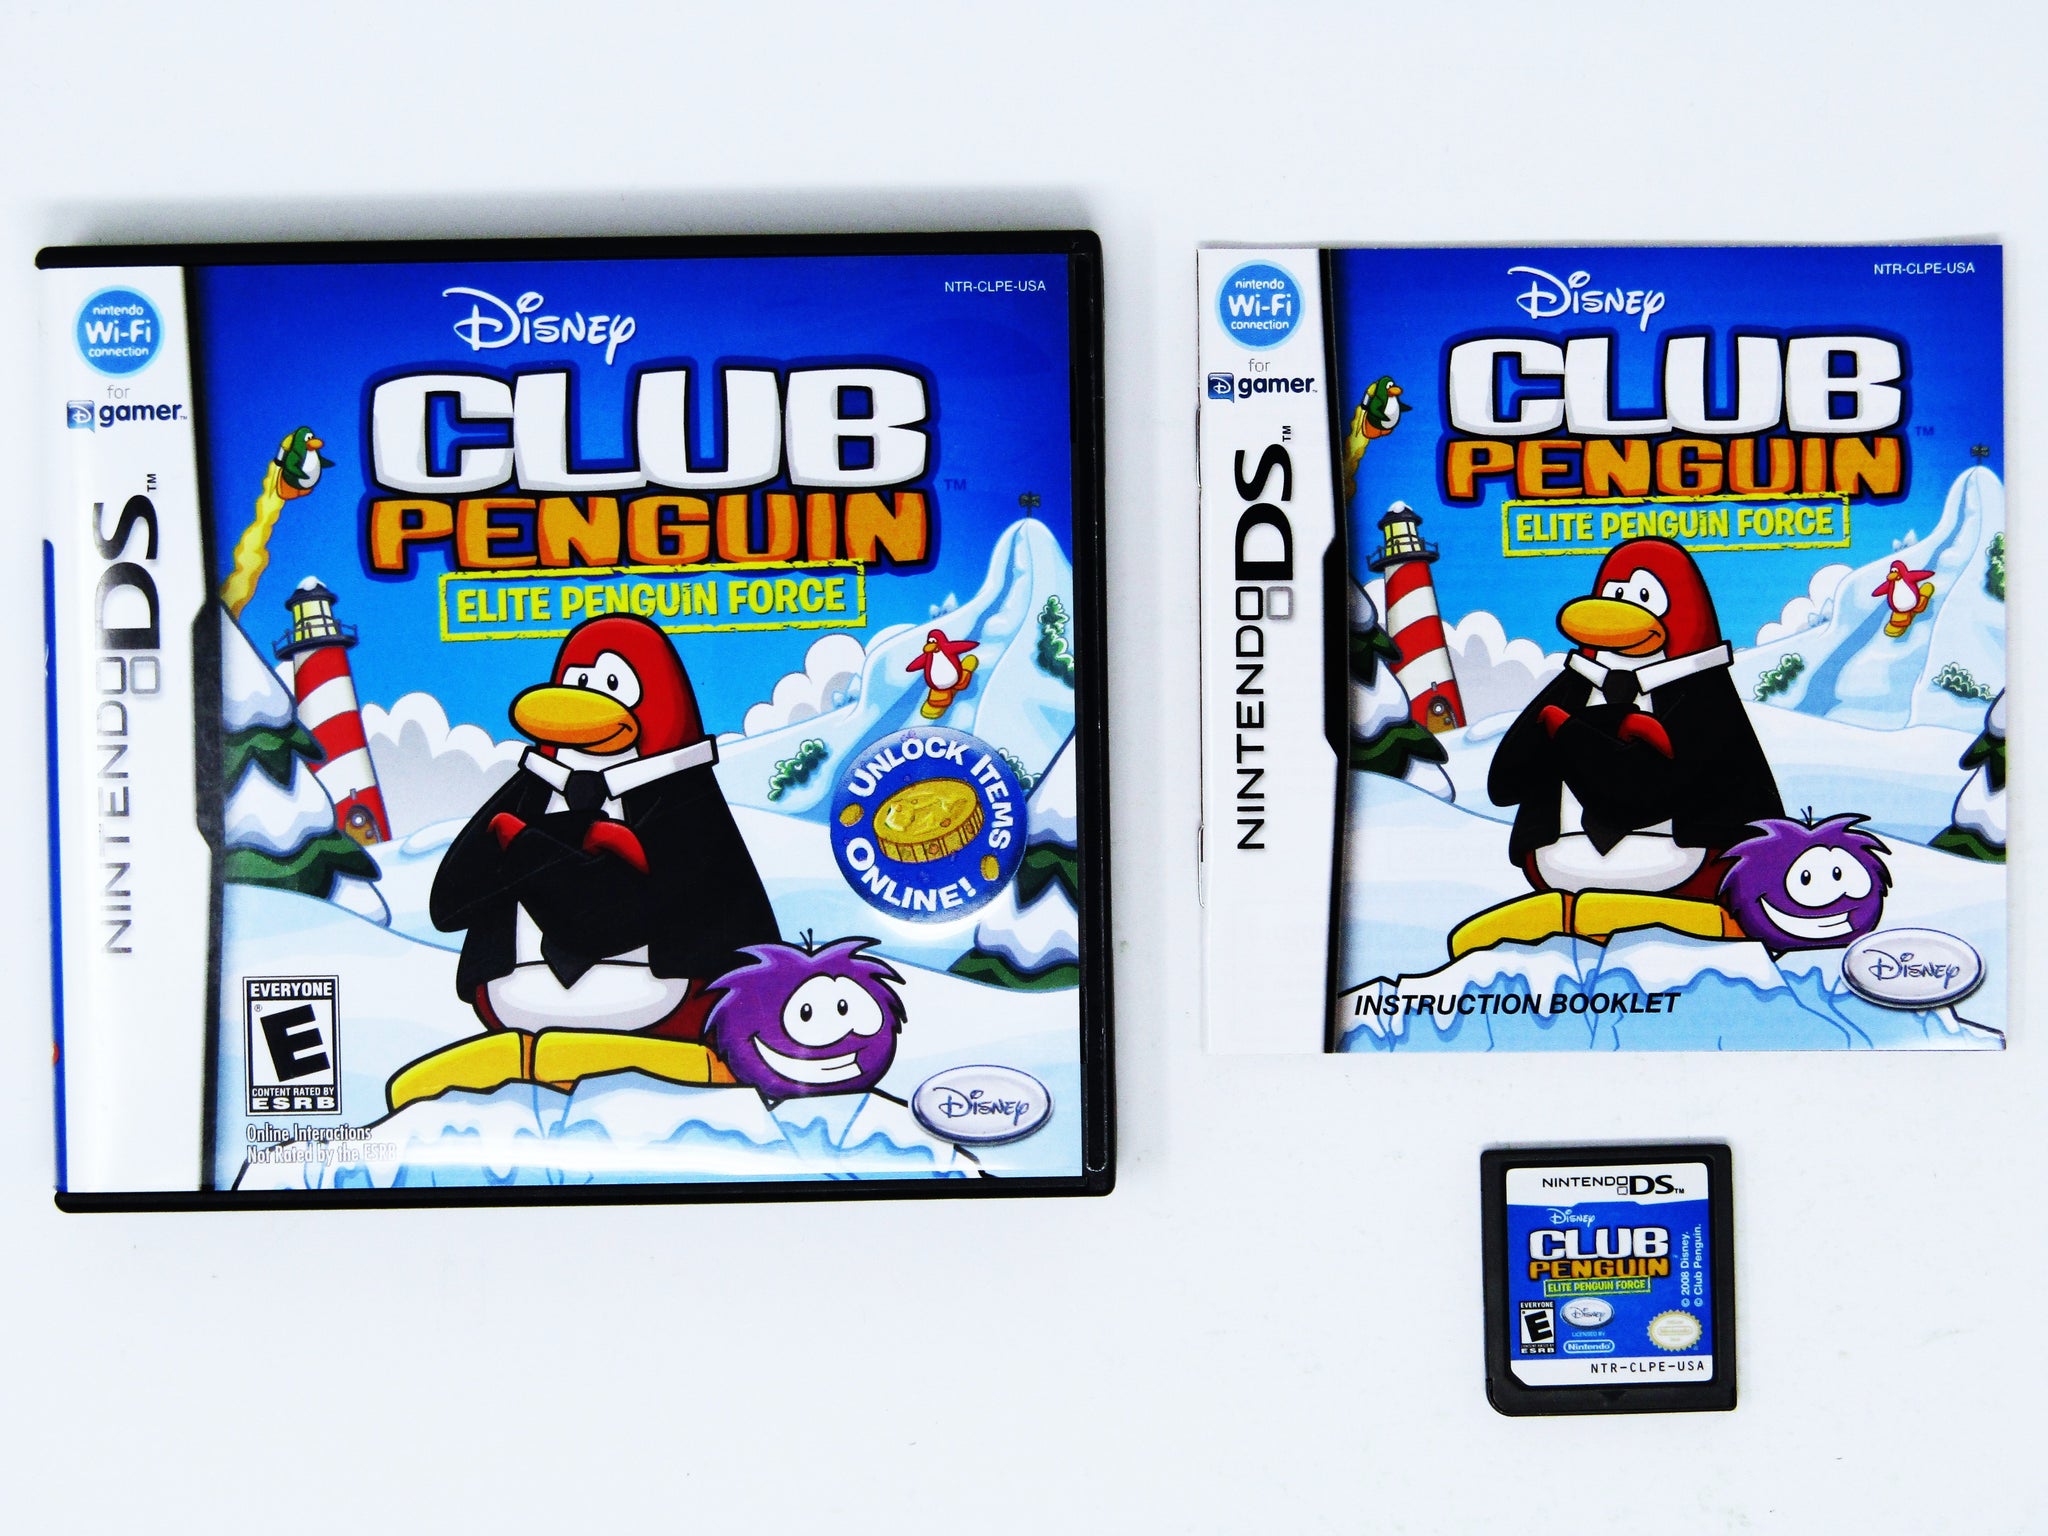 8393: dekutony's DS Club Penguin: Elite Penguin Force The Puffle  Pranksters in 02:52.02 - Submission #8393 - TASVideos